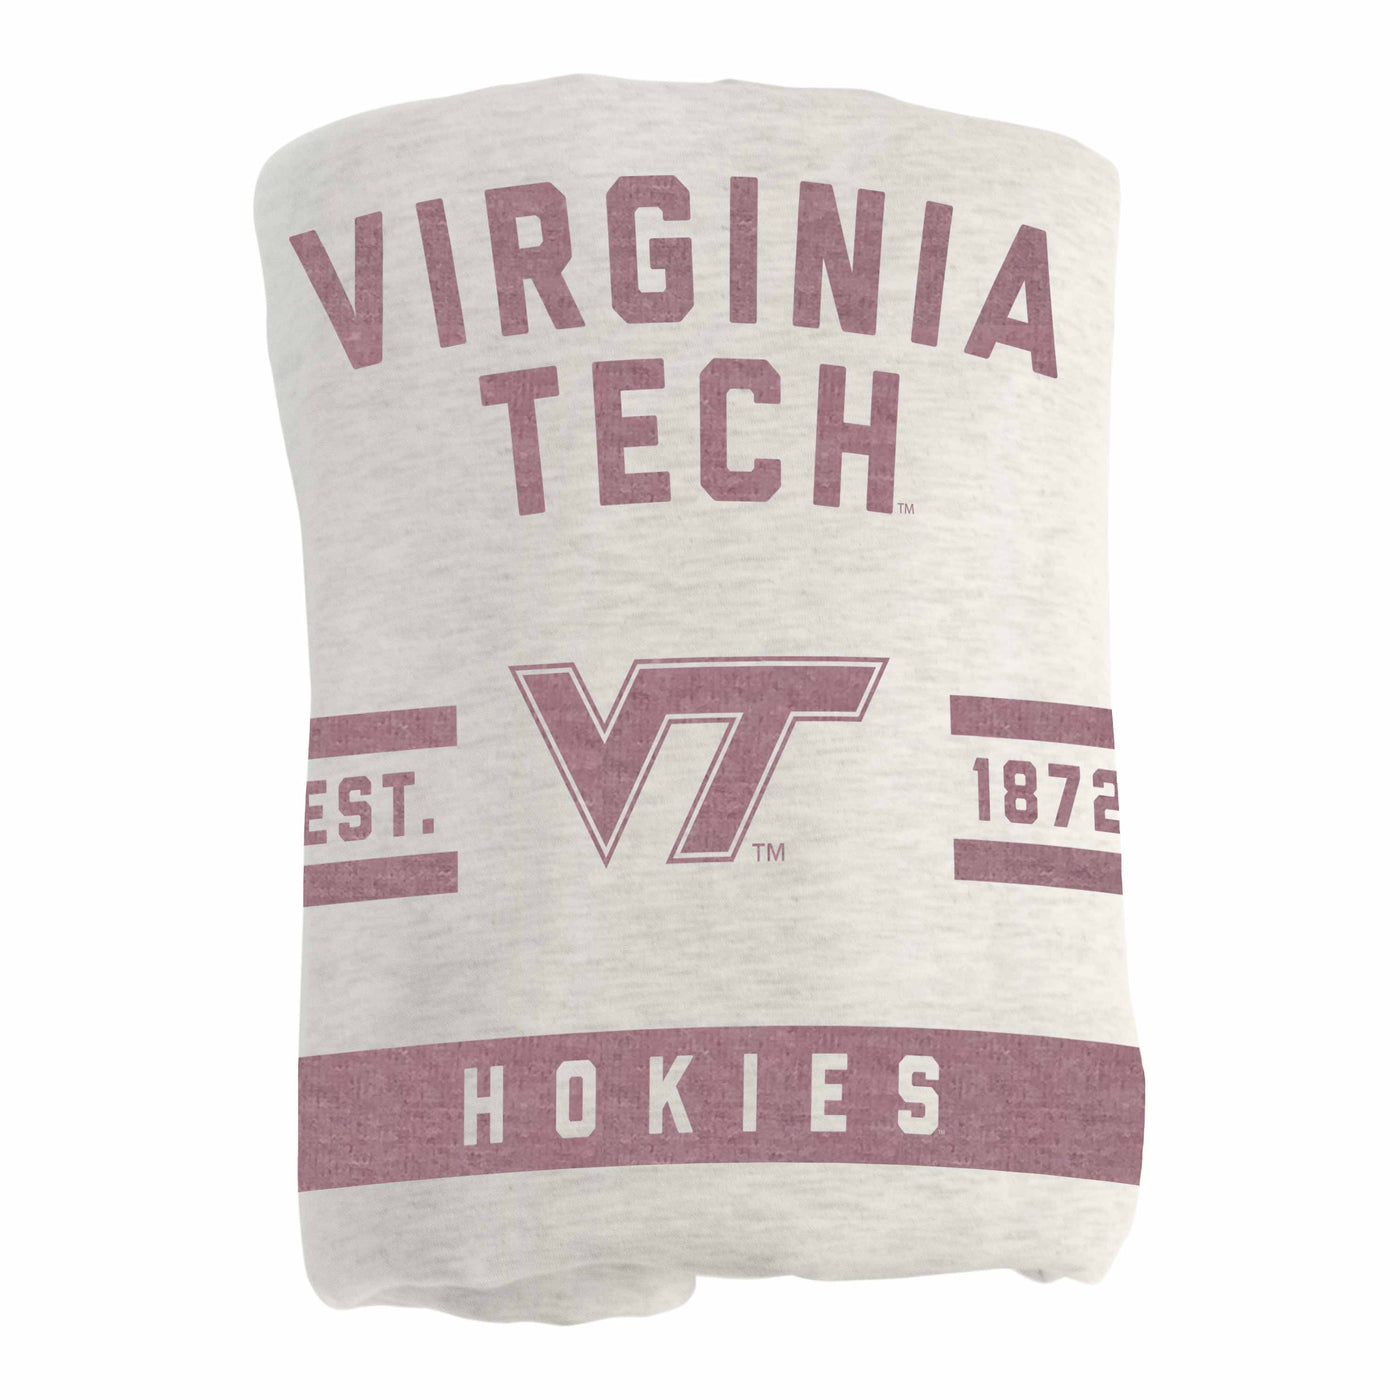 Virginia Tech Oatmeal Sweatshirt Blanket